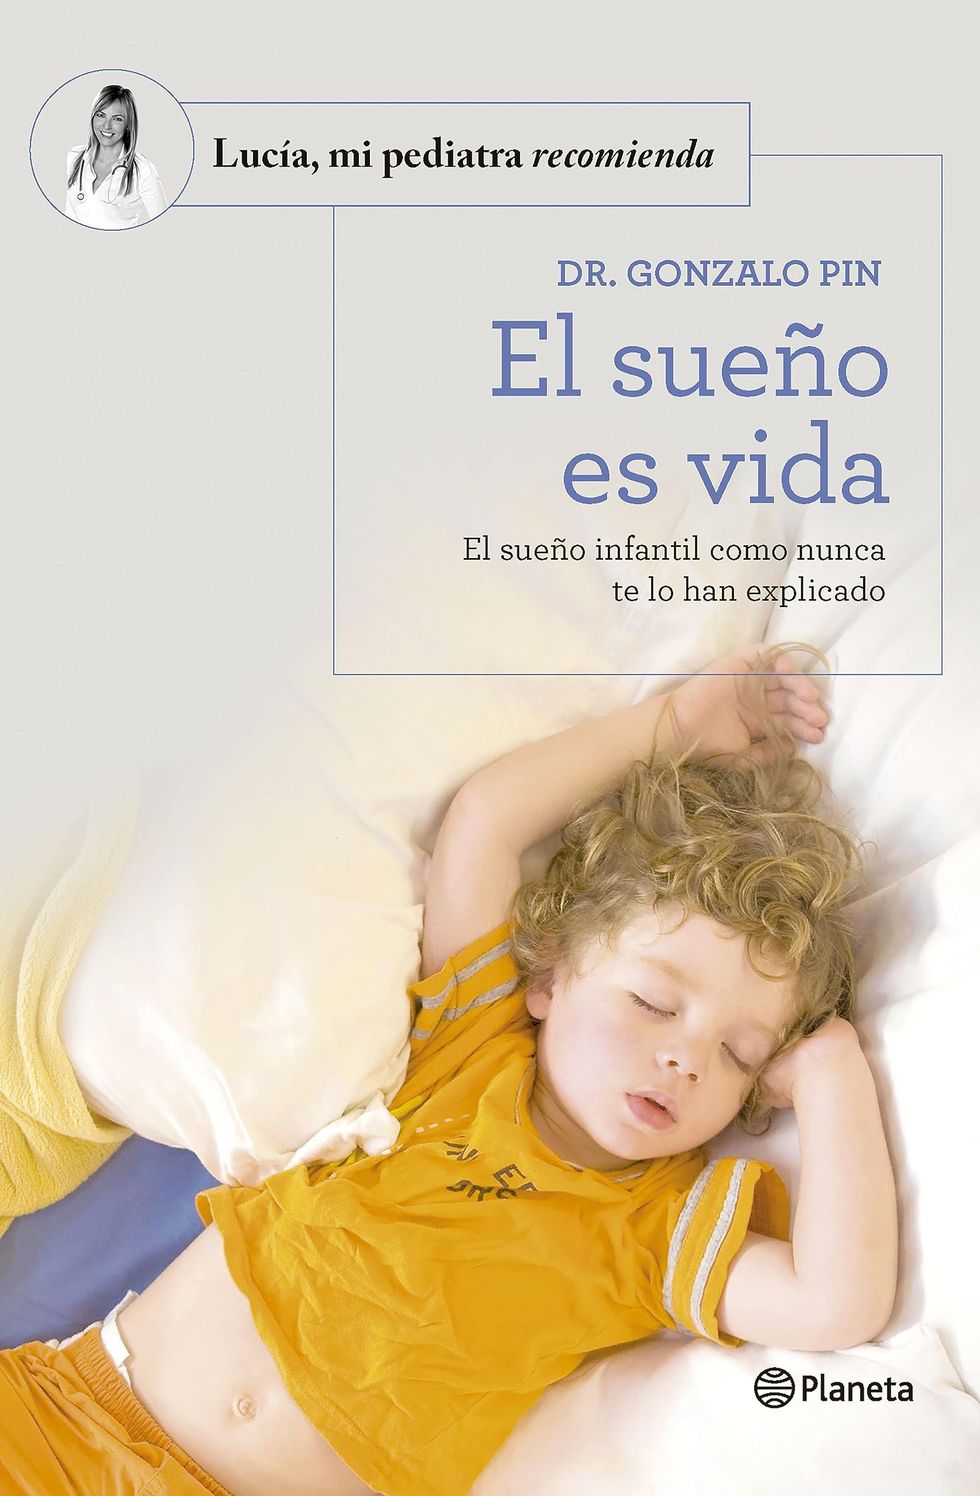 Discover Lucia Mi Pediatra Events & Activities in Churriana de la